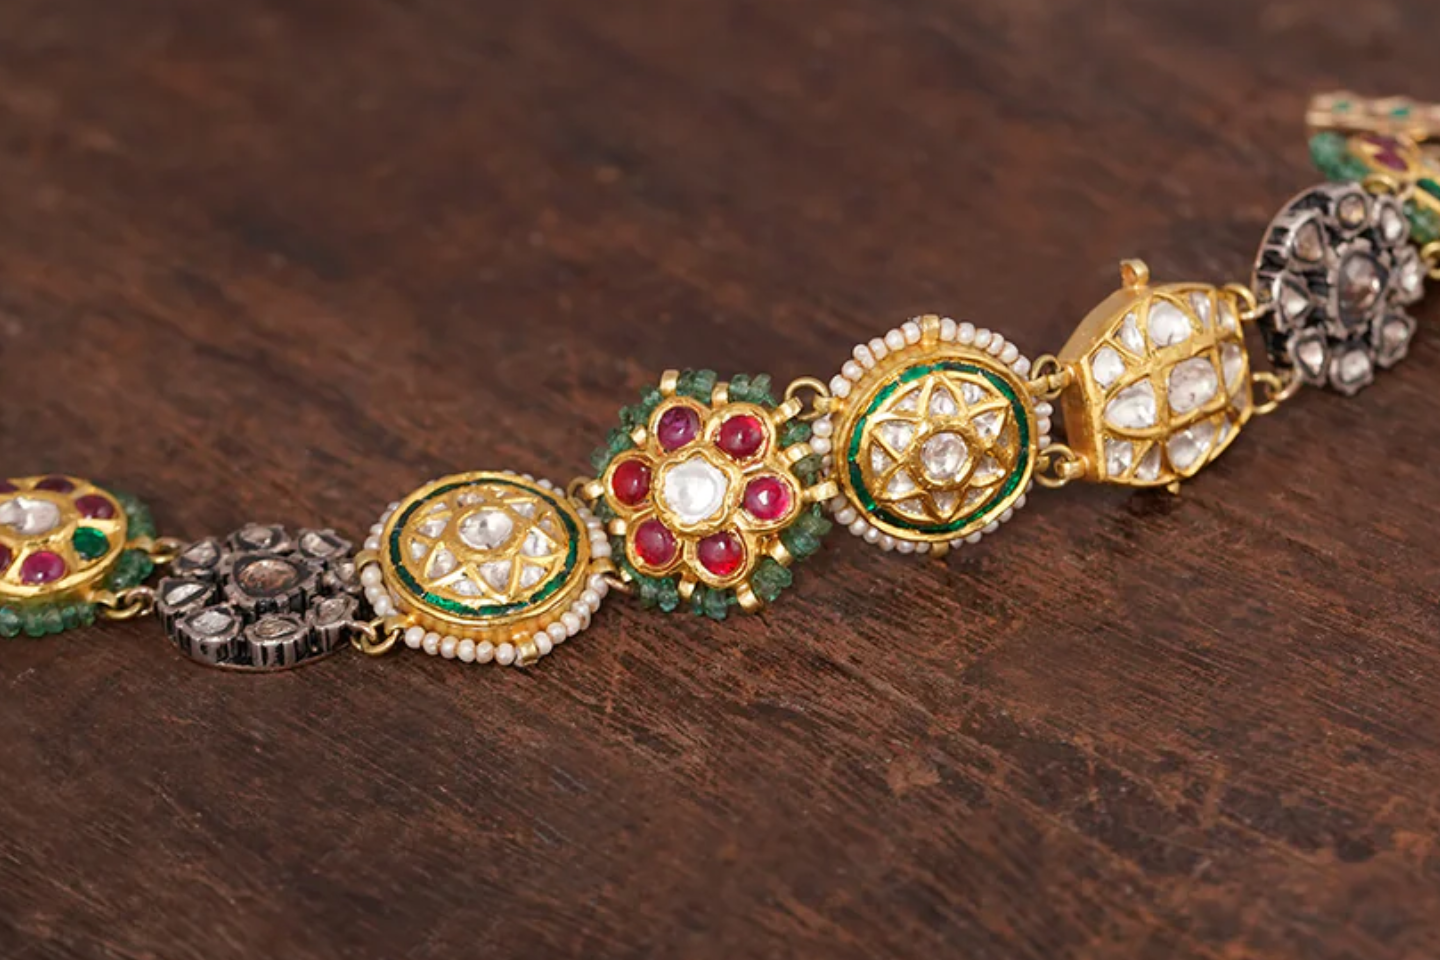 Multipurpose Indian bracelet and choker necklace